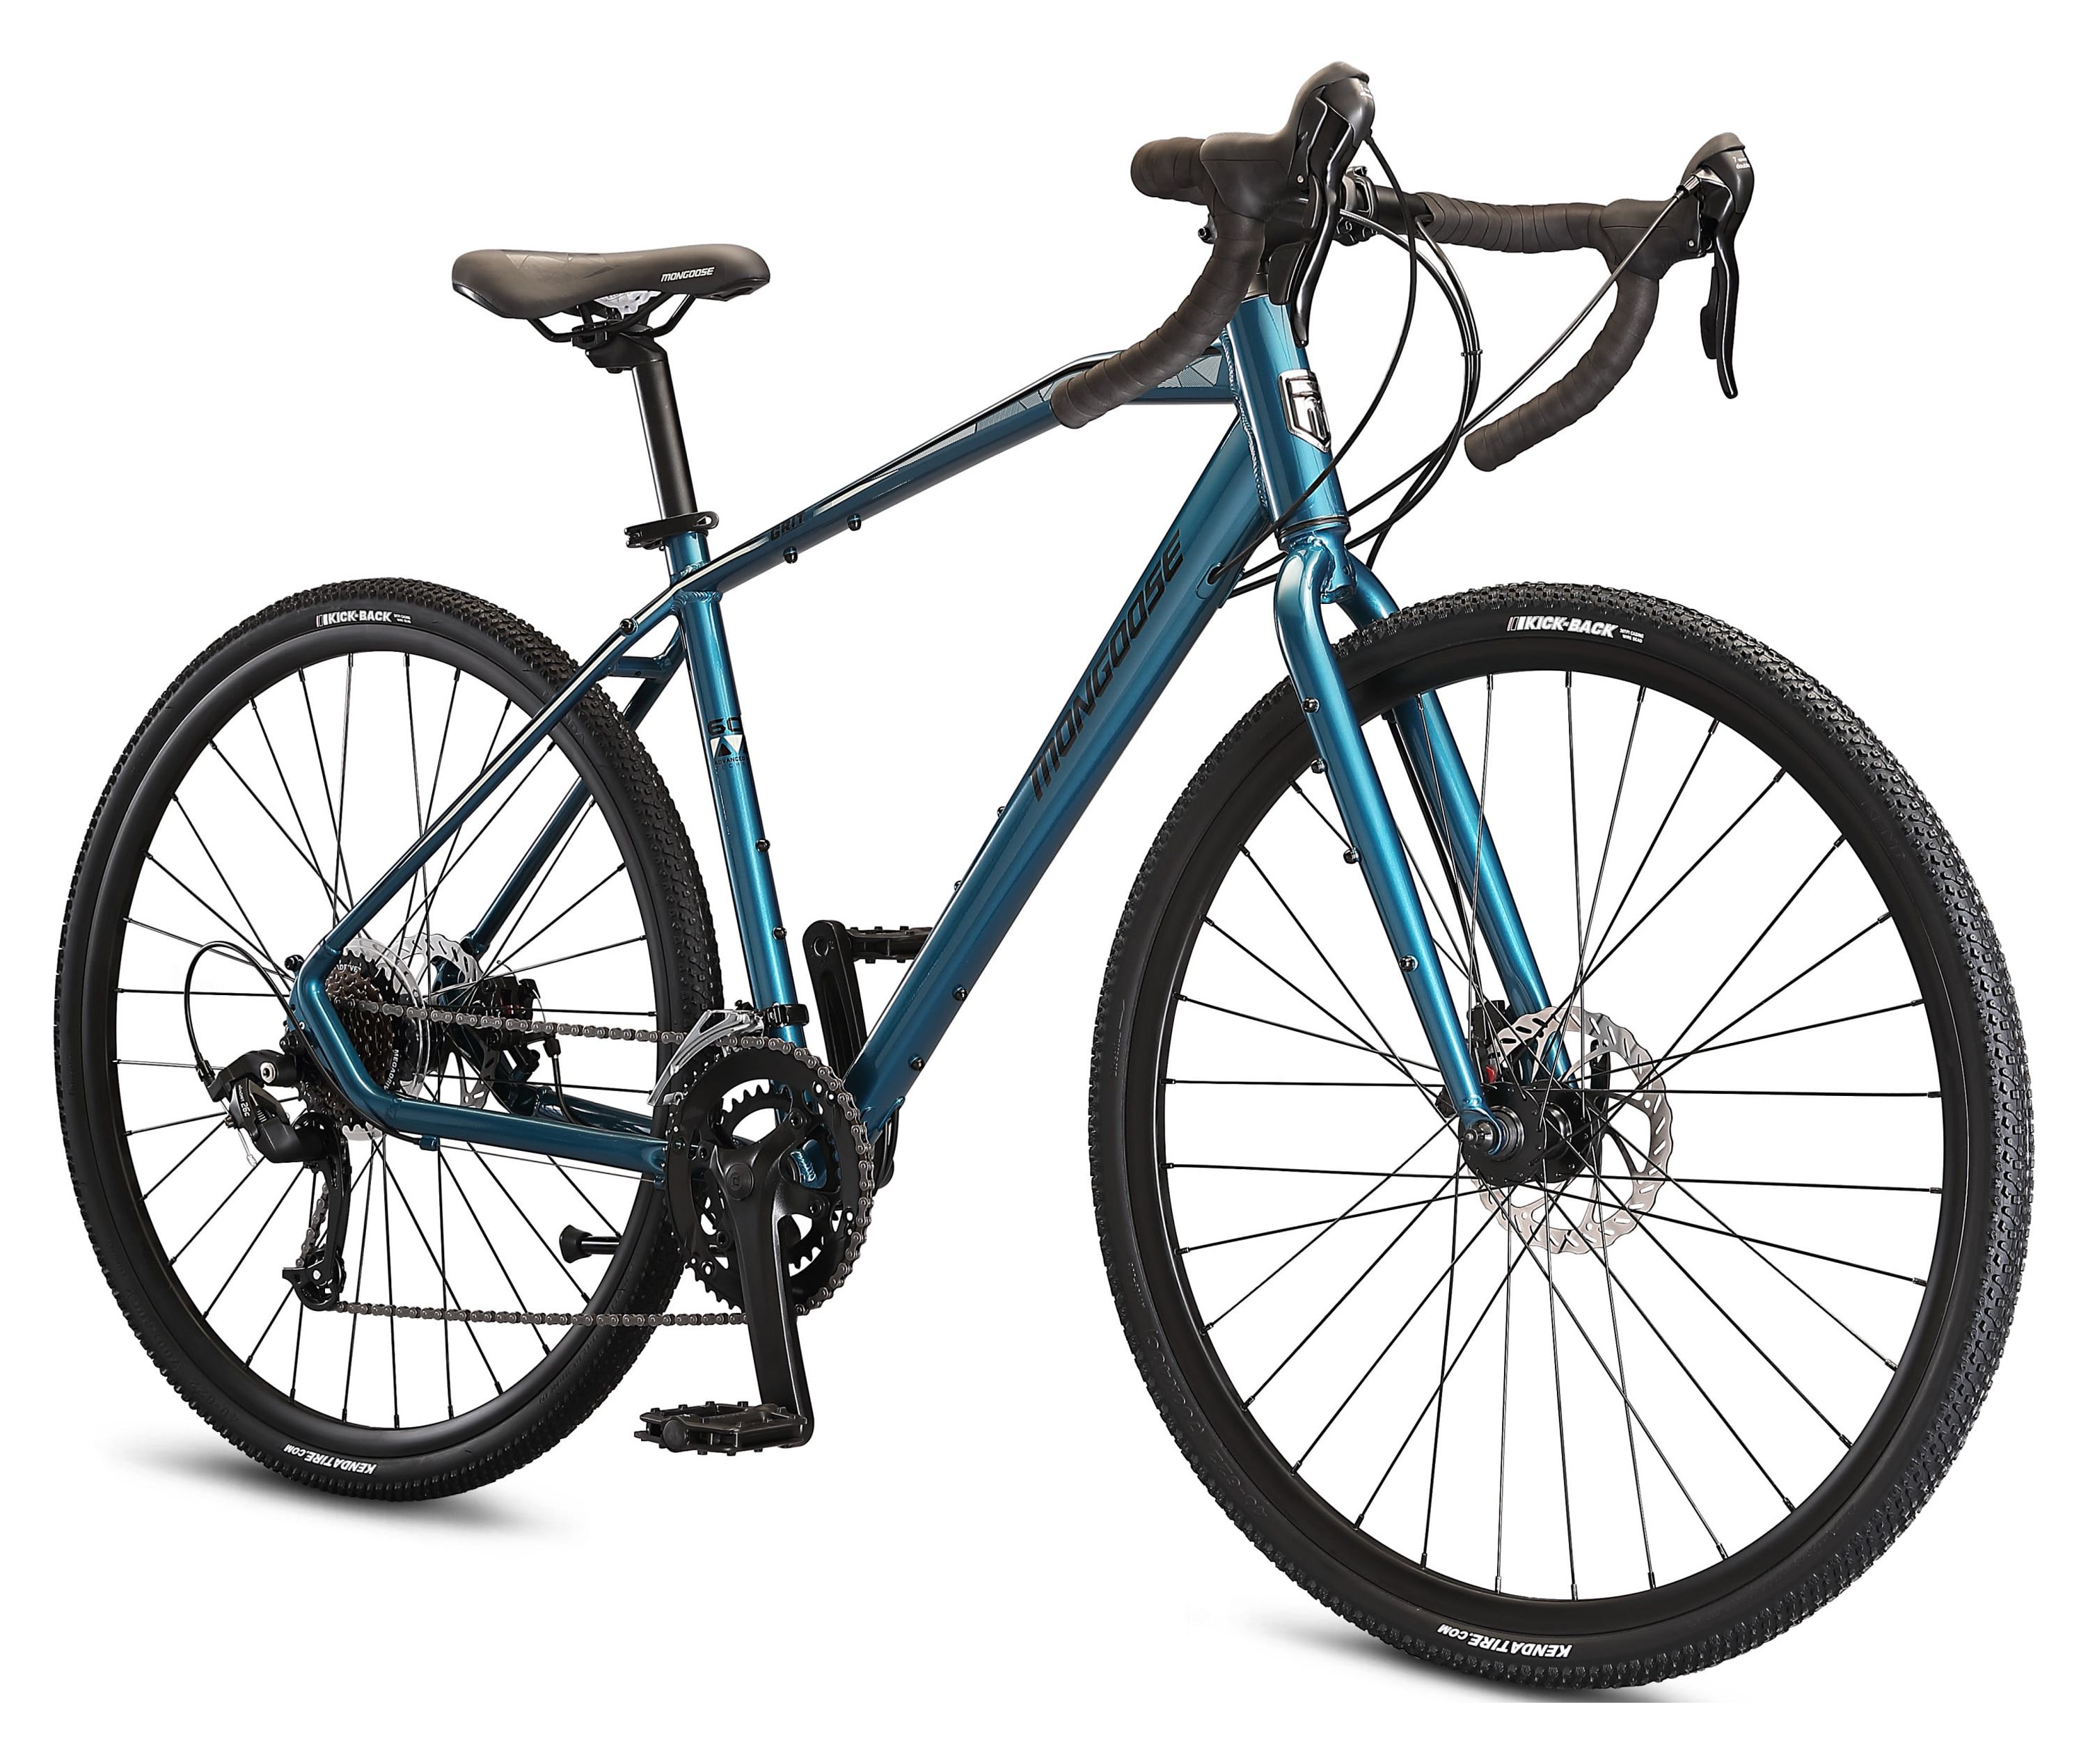 Mongoose Grit Adventure Road Bike, 14 Speeds, 700c Wheels, Blue, Ages 14+ - image 1 of 8